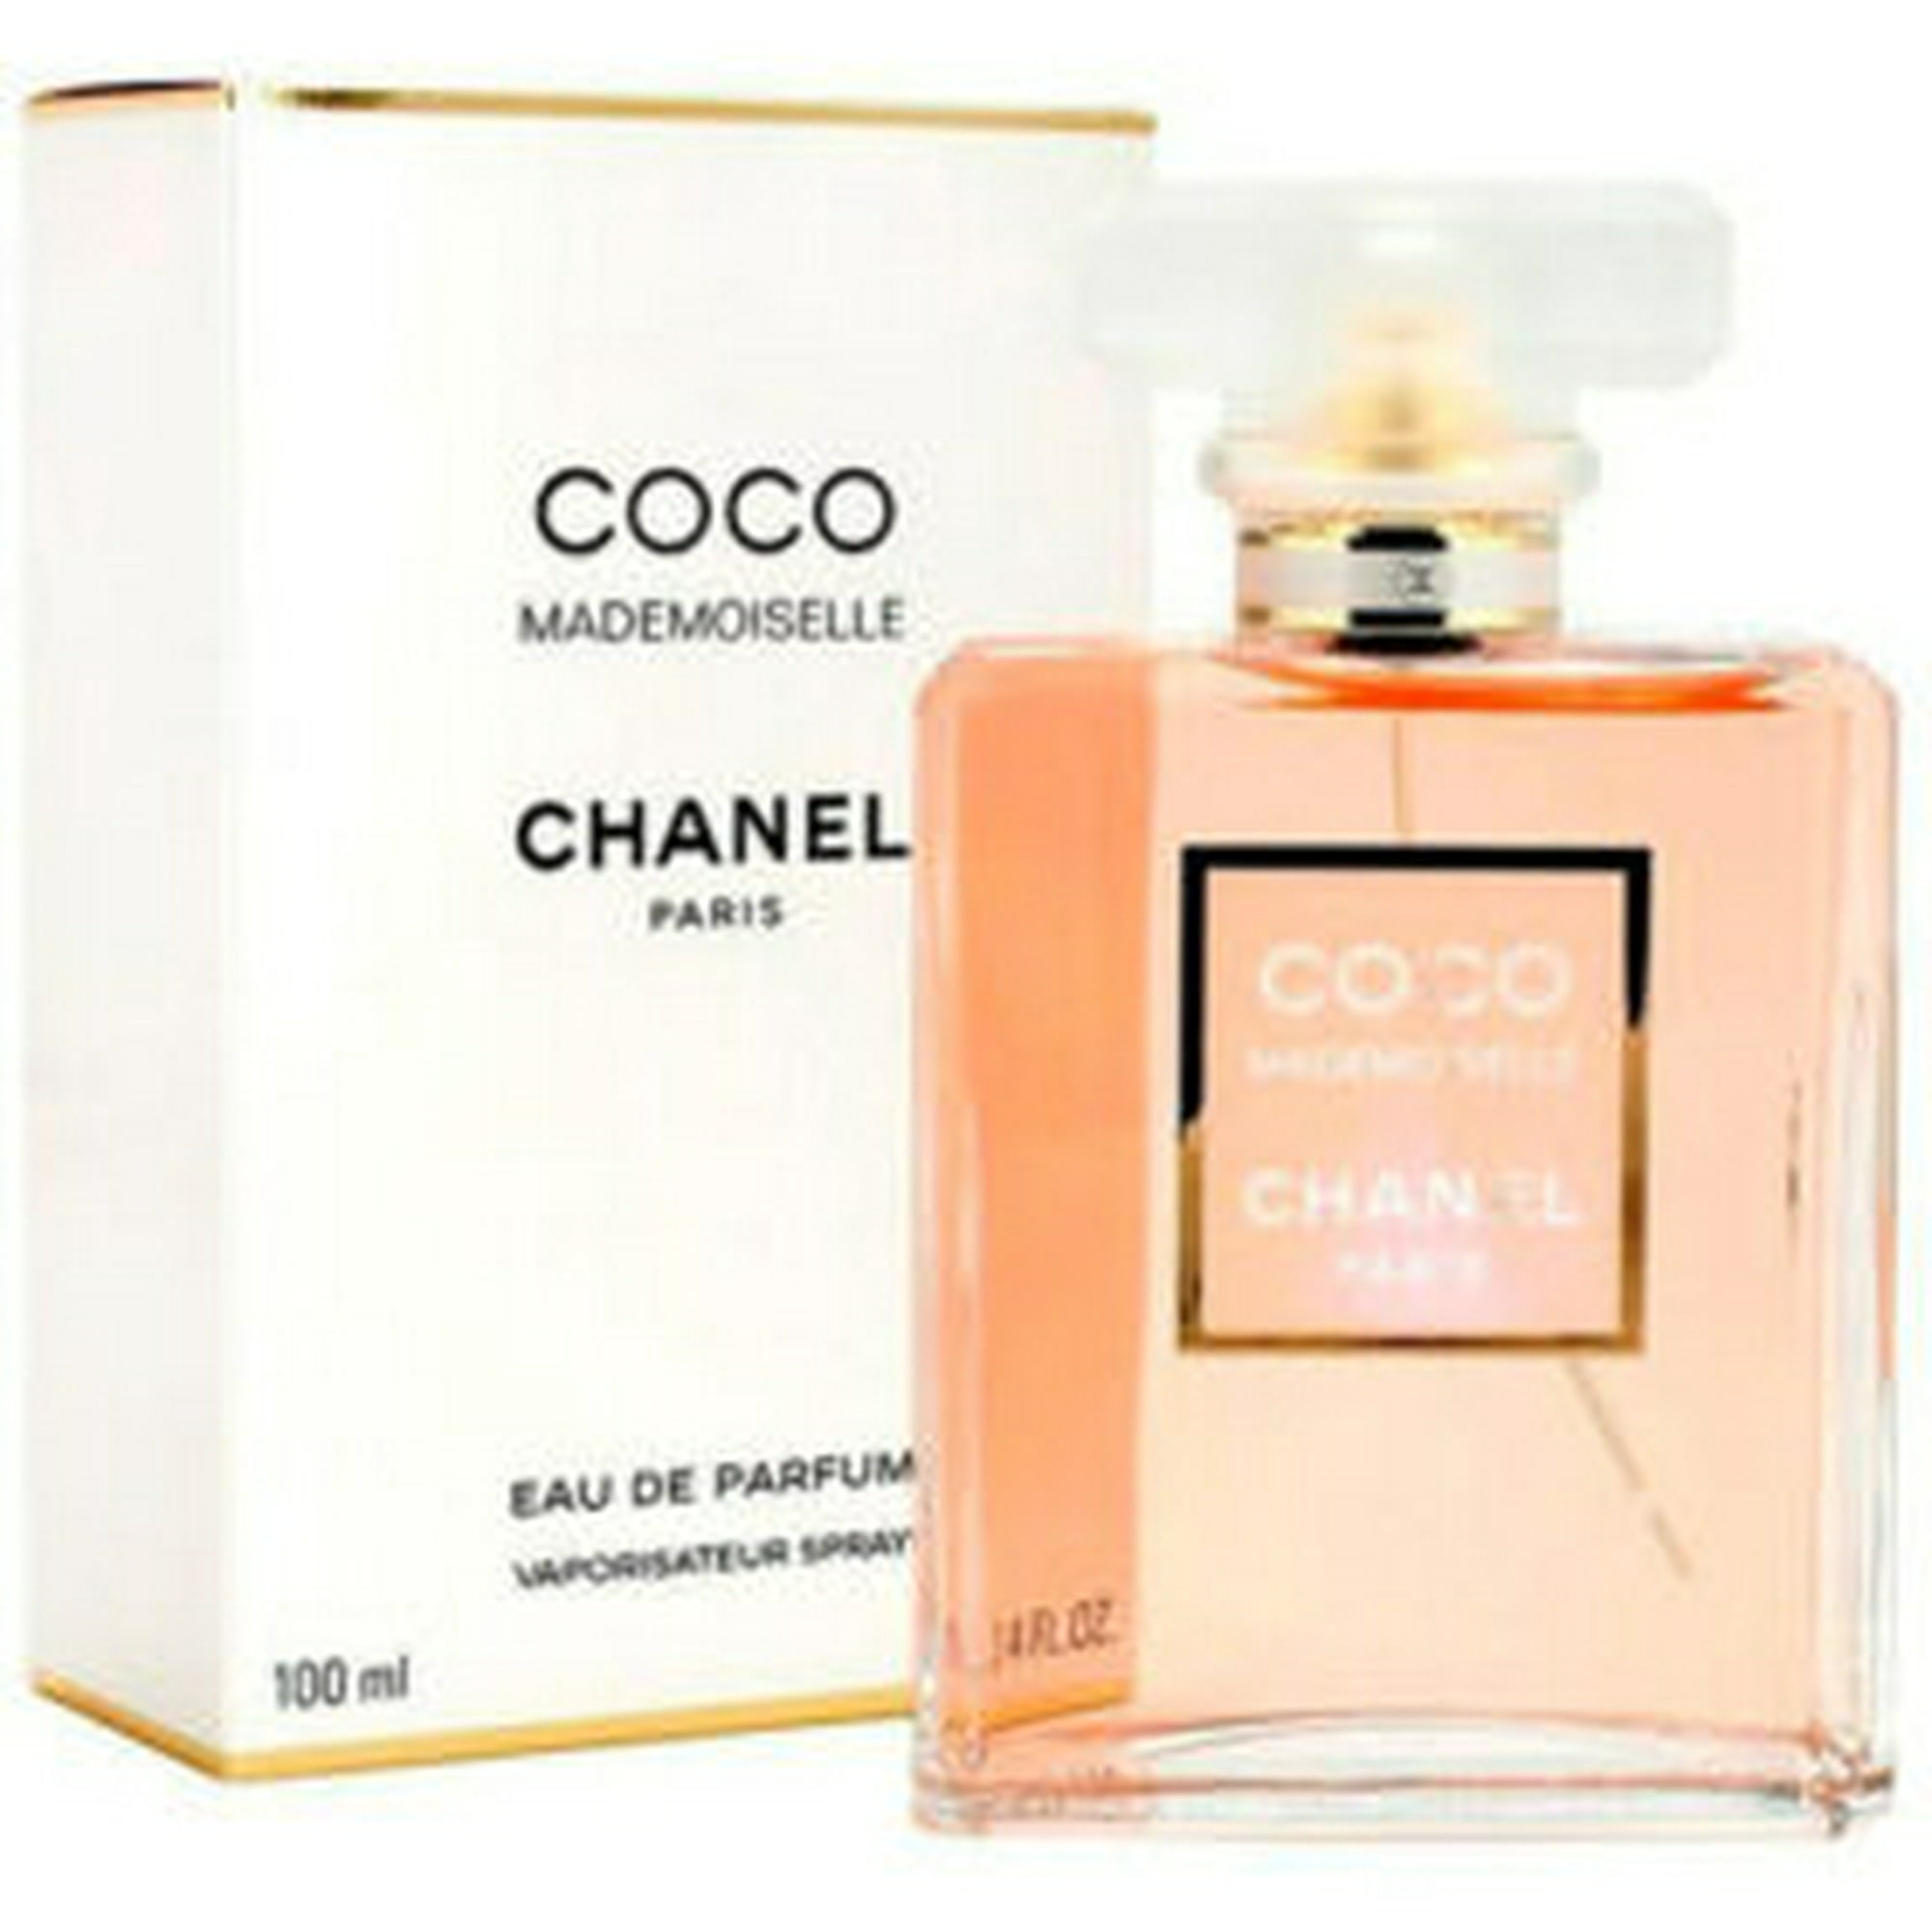 Perfume Chanel Coco Chanel Eau de Toilette Spray 100ml/3.4oz